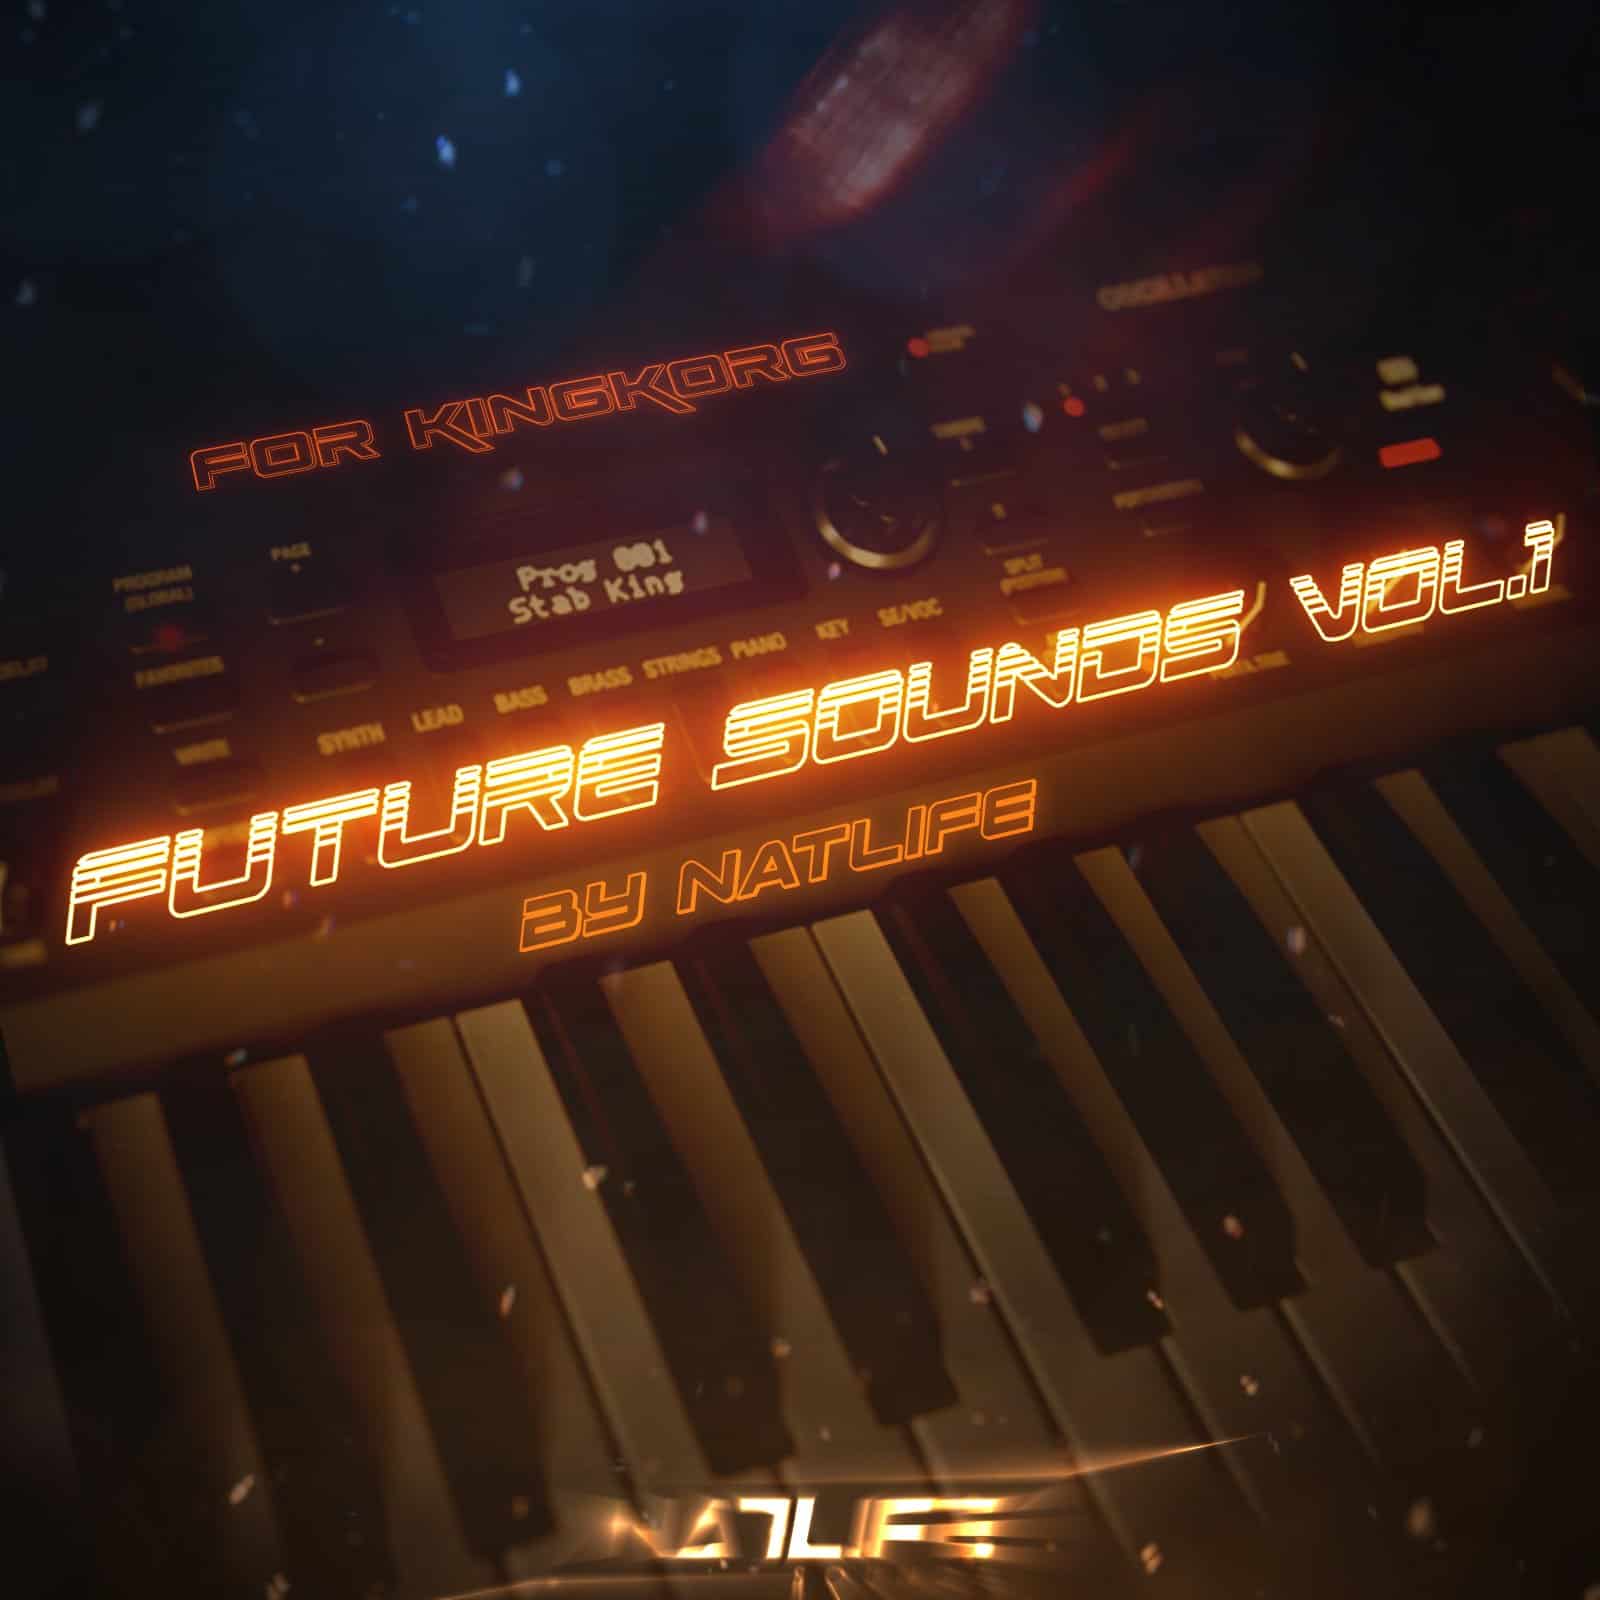 Future Sounds Vol.1 For Korg KingKorg Released